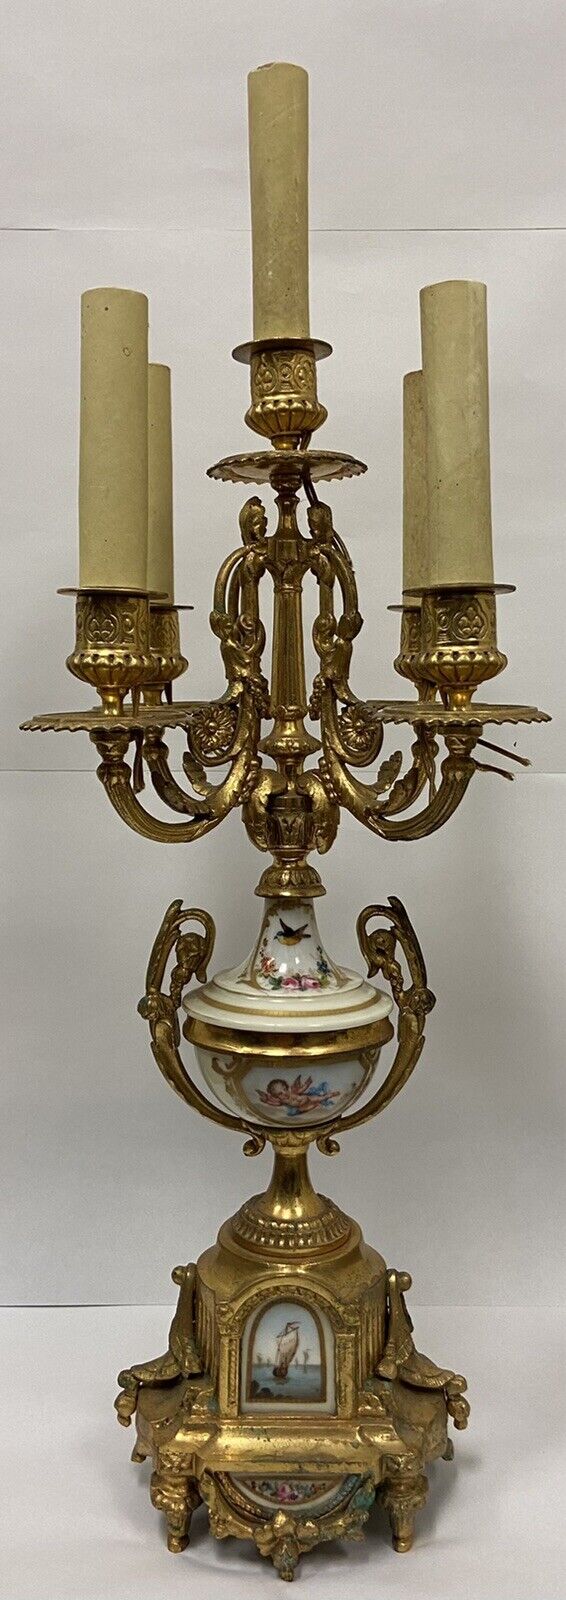 Spectacular antique gilded bronze and ceramic art  table lamp